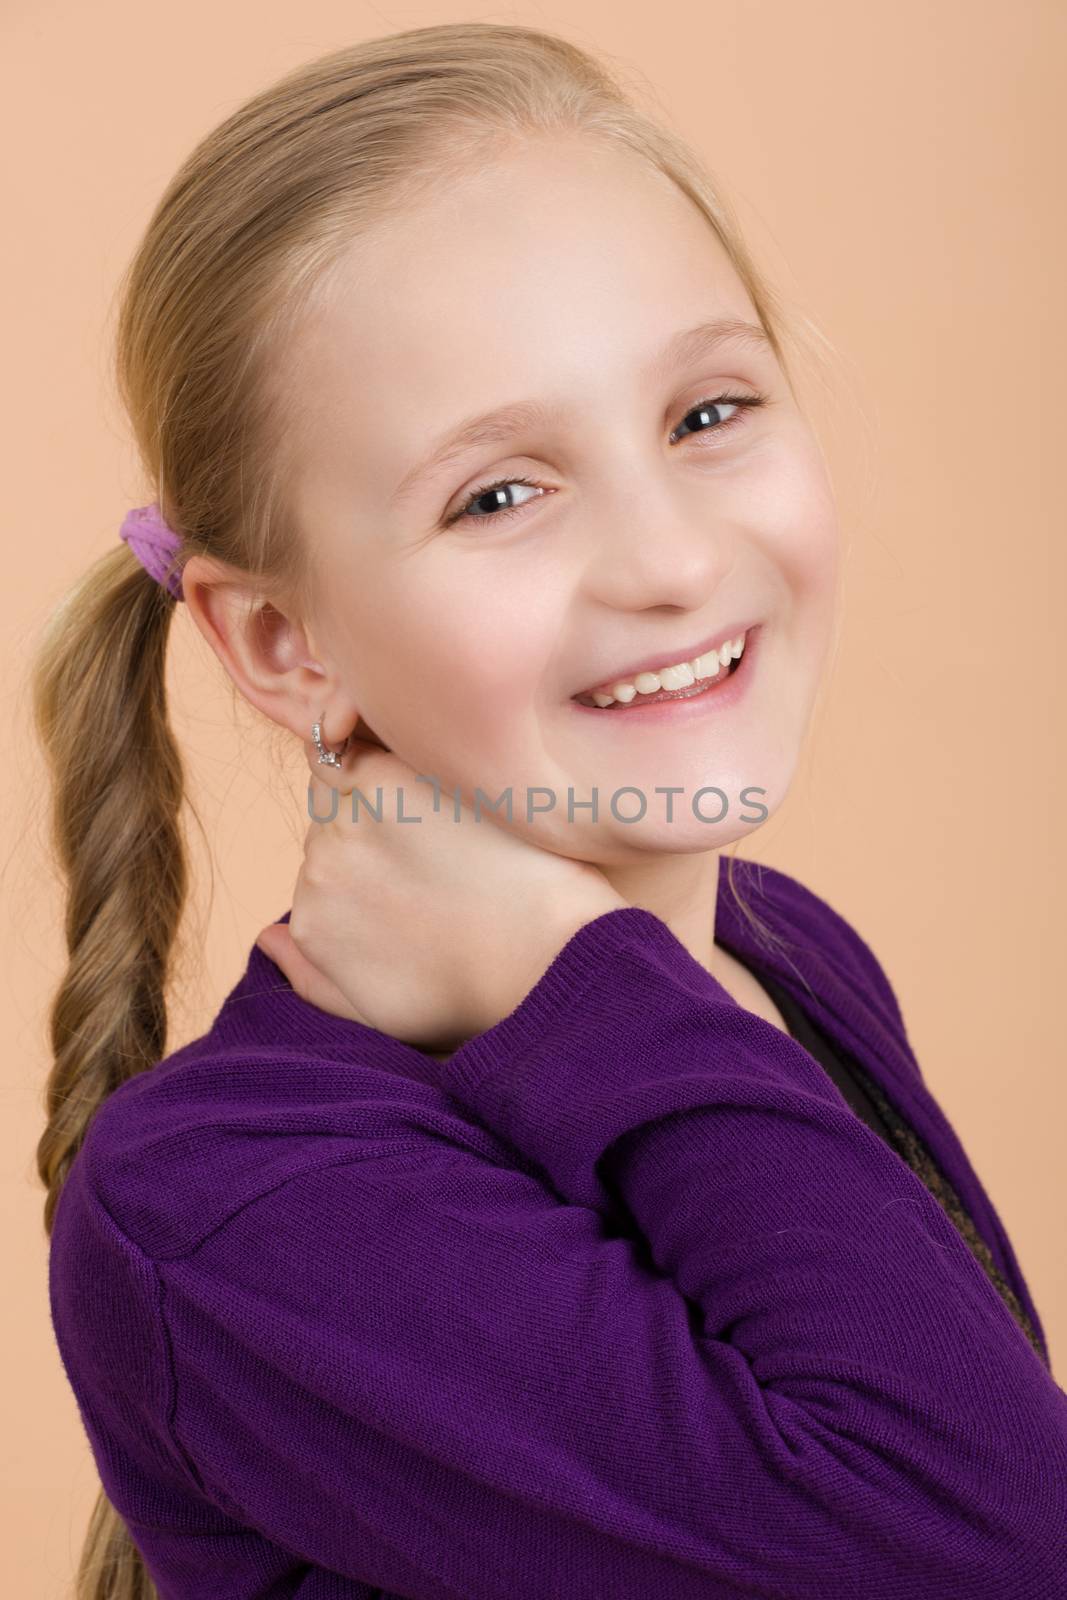 Portrait of fashion smiling european little long hair blonde girl posing in atelier